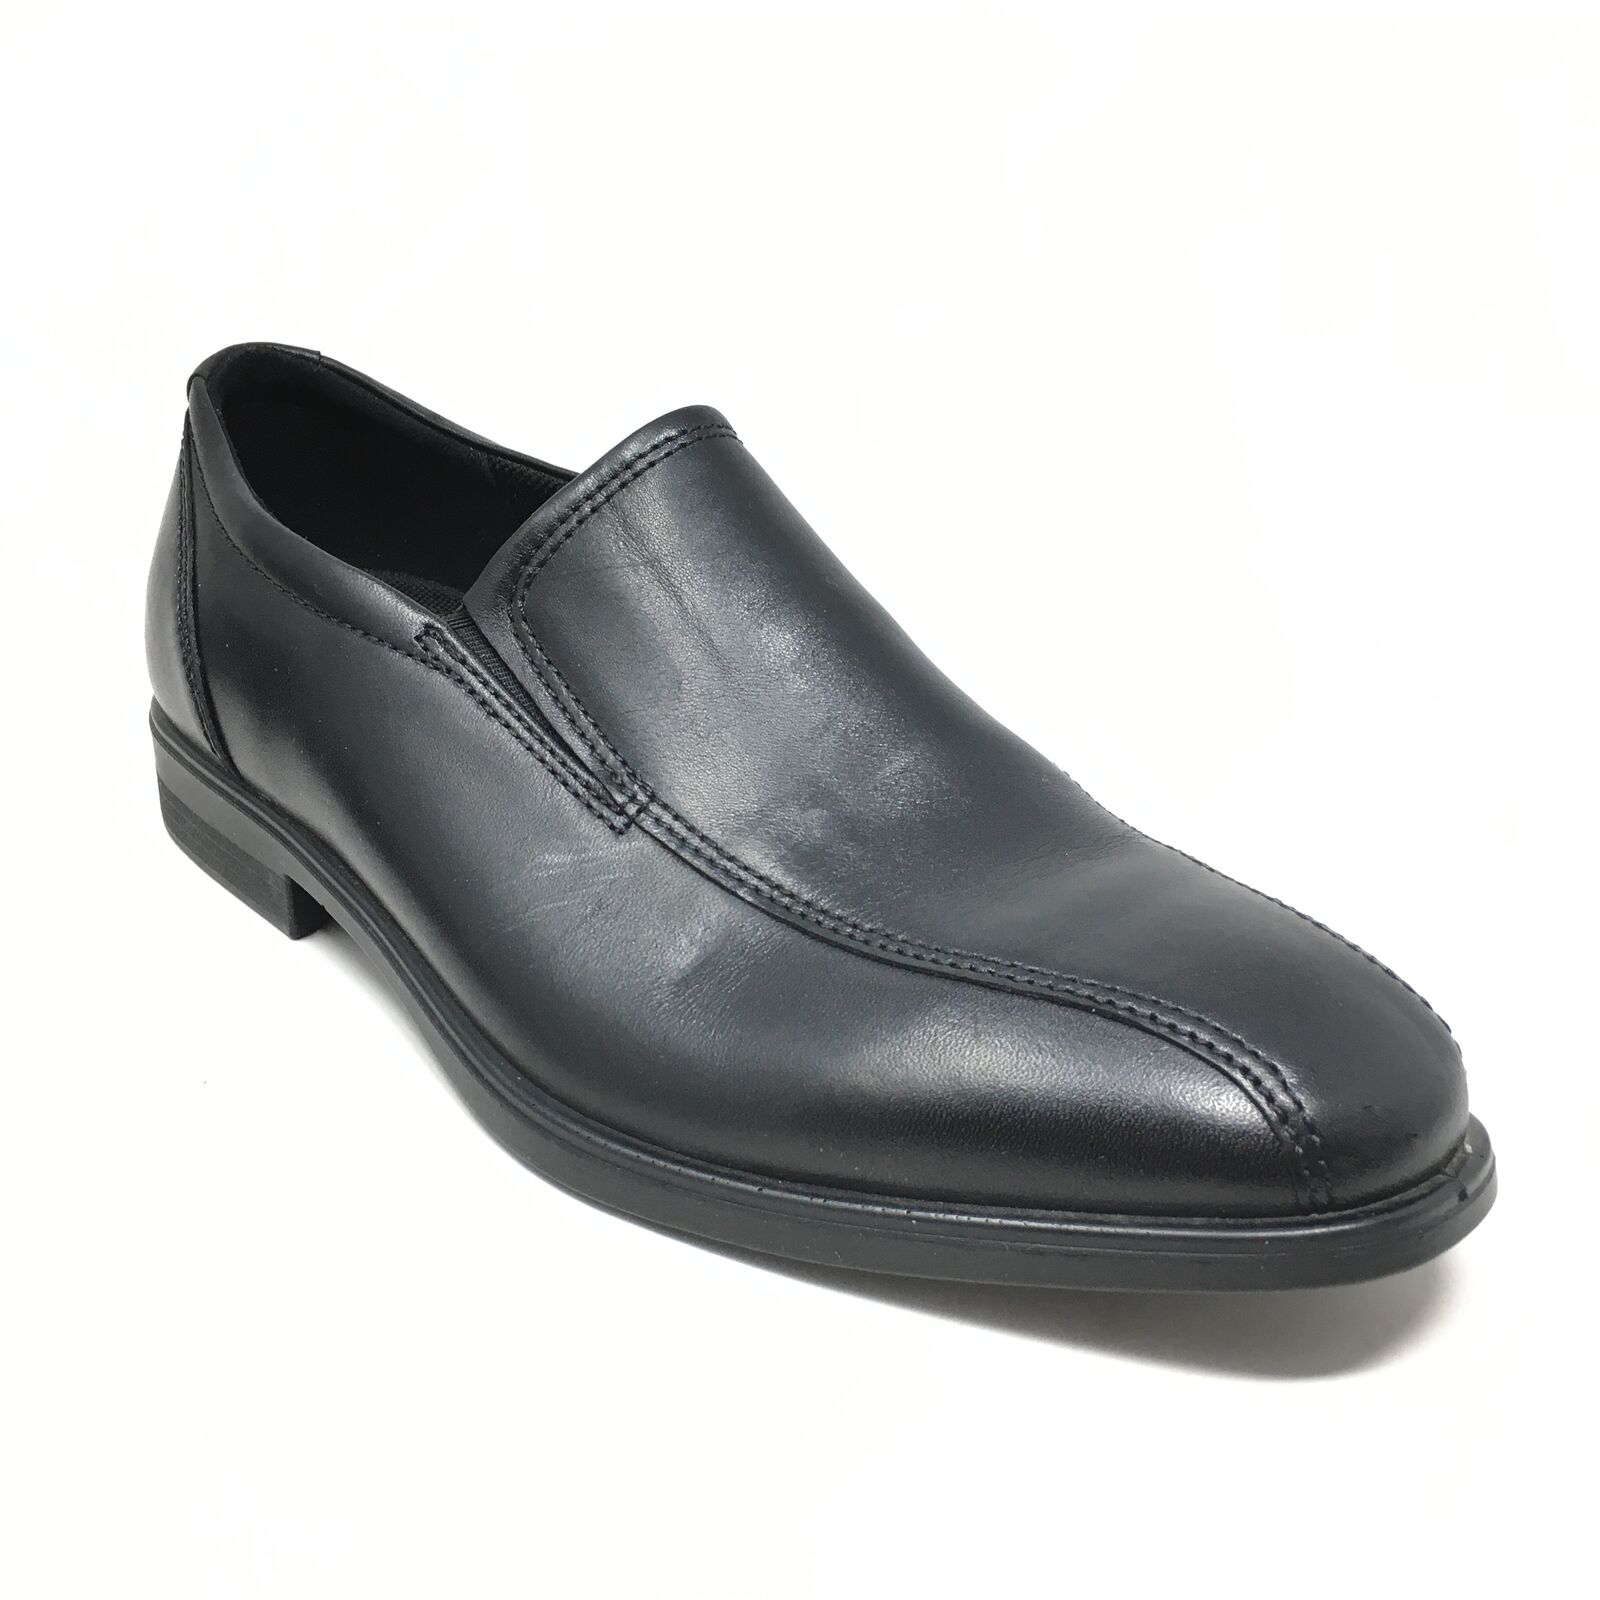 Men's Ecco Slip On Loafers Dress Shoes Size 40 EU/6-6.5 US Black Leather